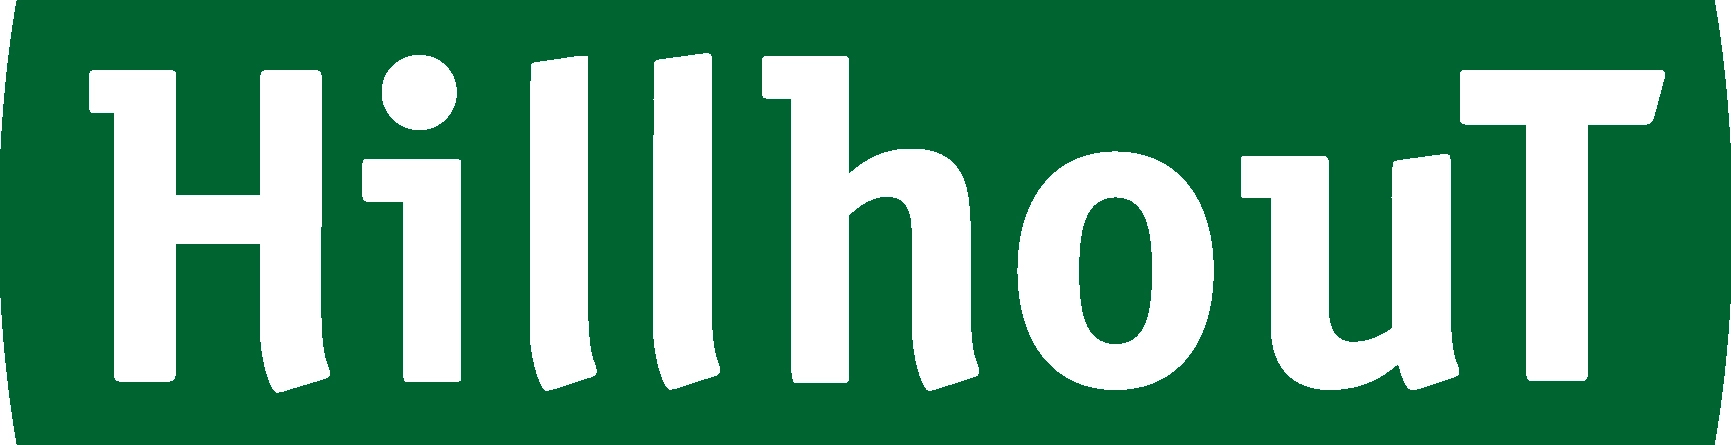 hillhout-logo